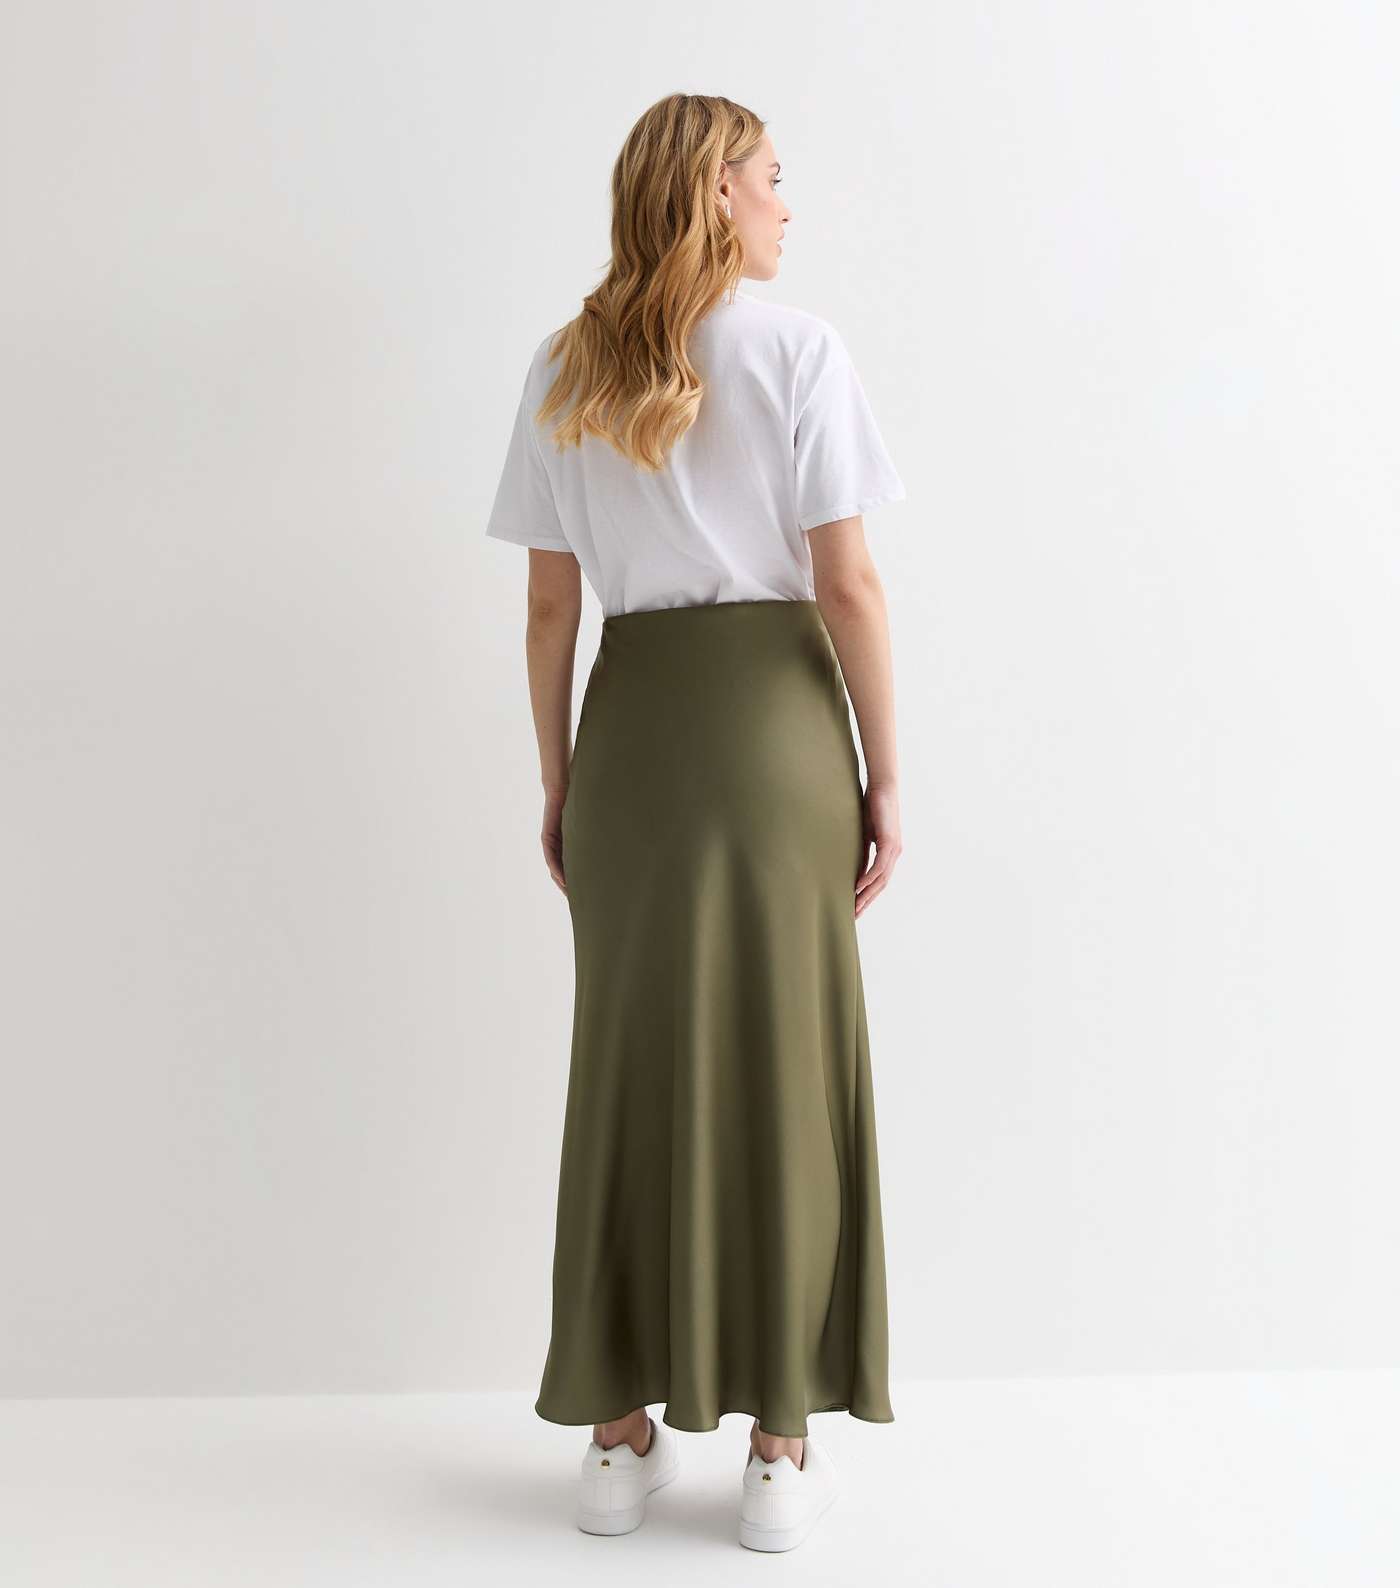 Olive Satin Bias Cut Midi Skirt Image 4